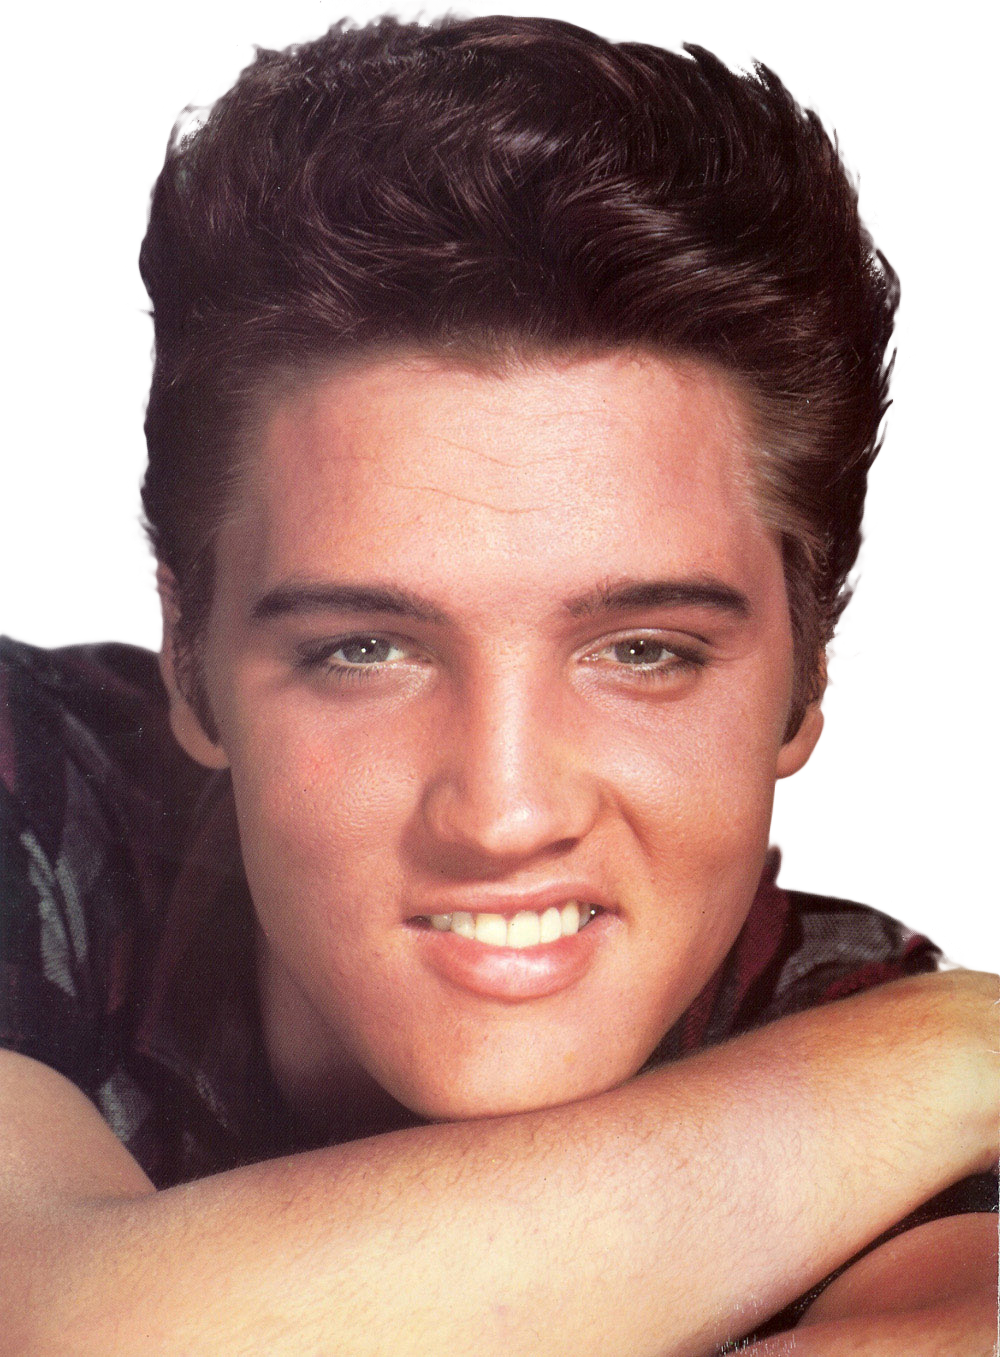 Young Elvis Presley Portrait